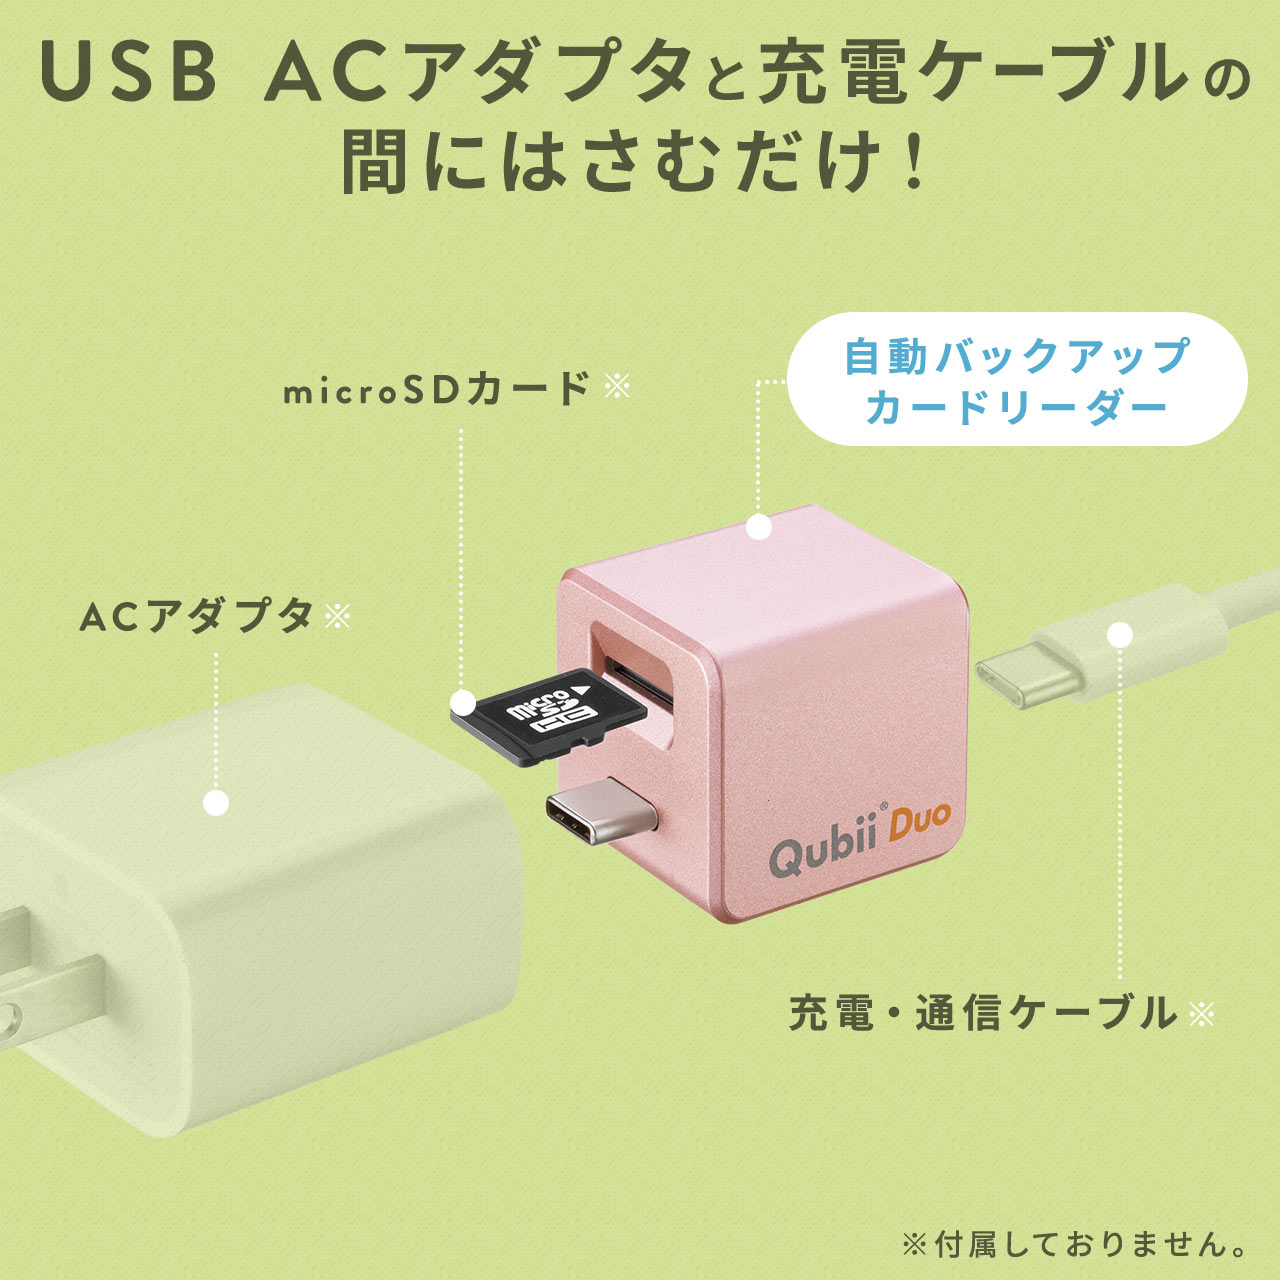 Qubii Duo USB-C  iPhone iPad iOS Android obNAbv eʕs [d microSD zCg iPhone15Ή 400-ADRIP014W